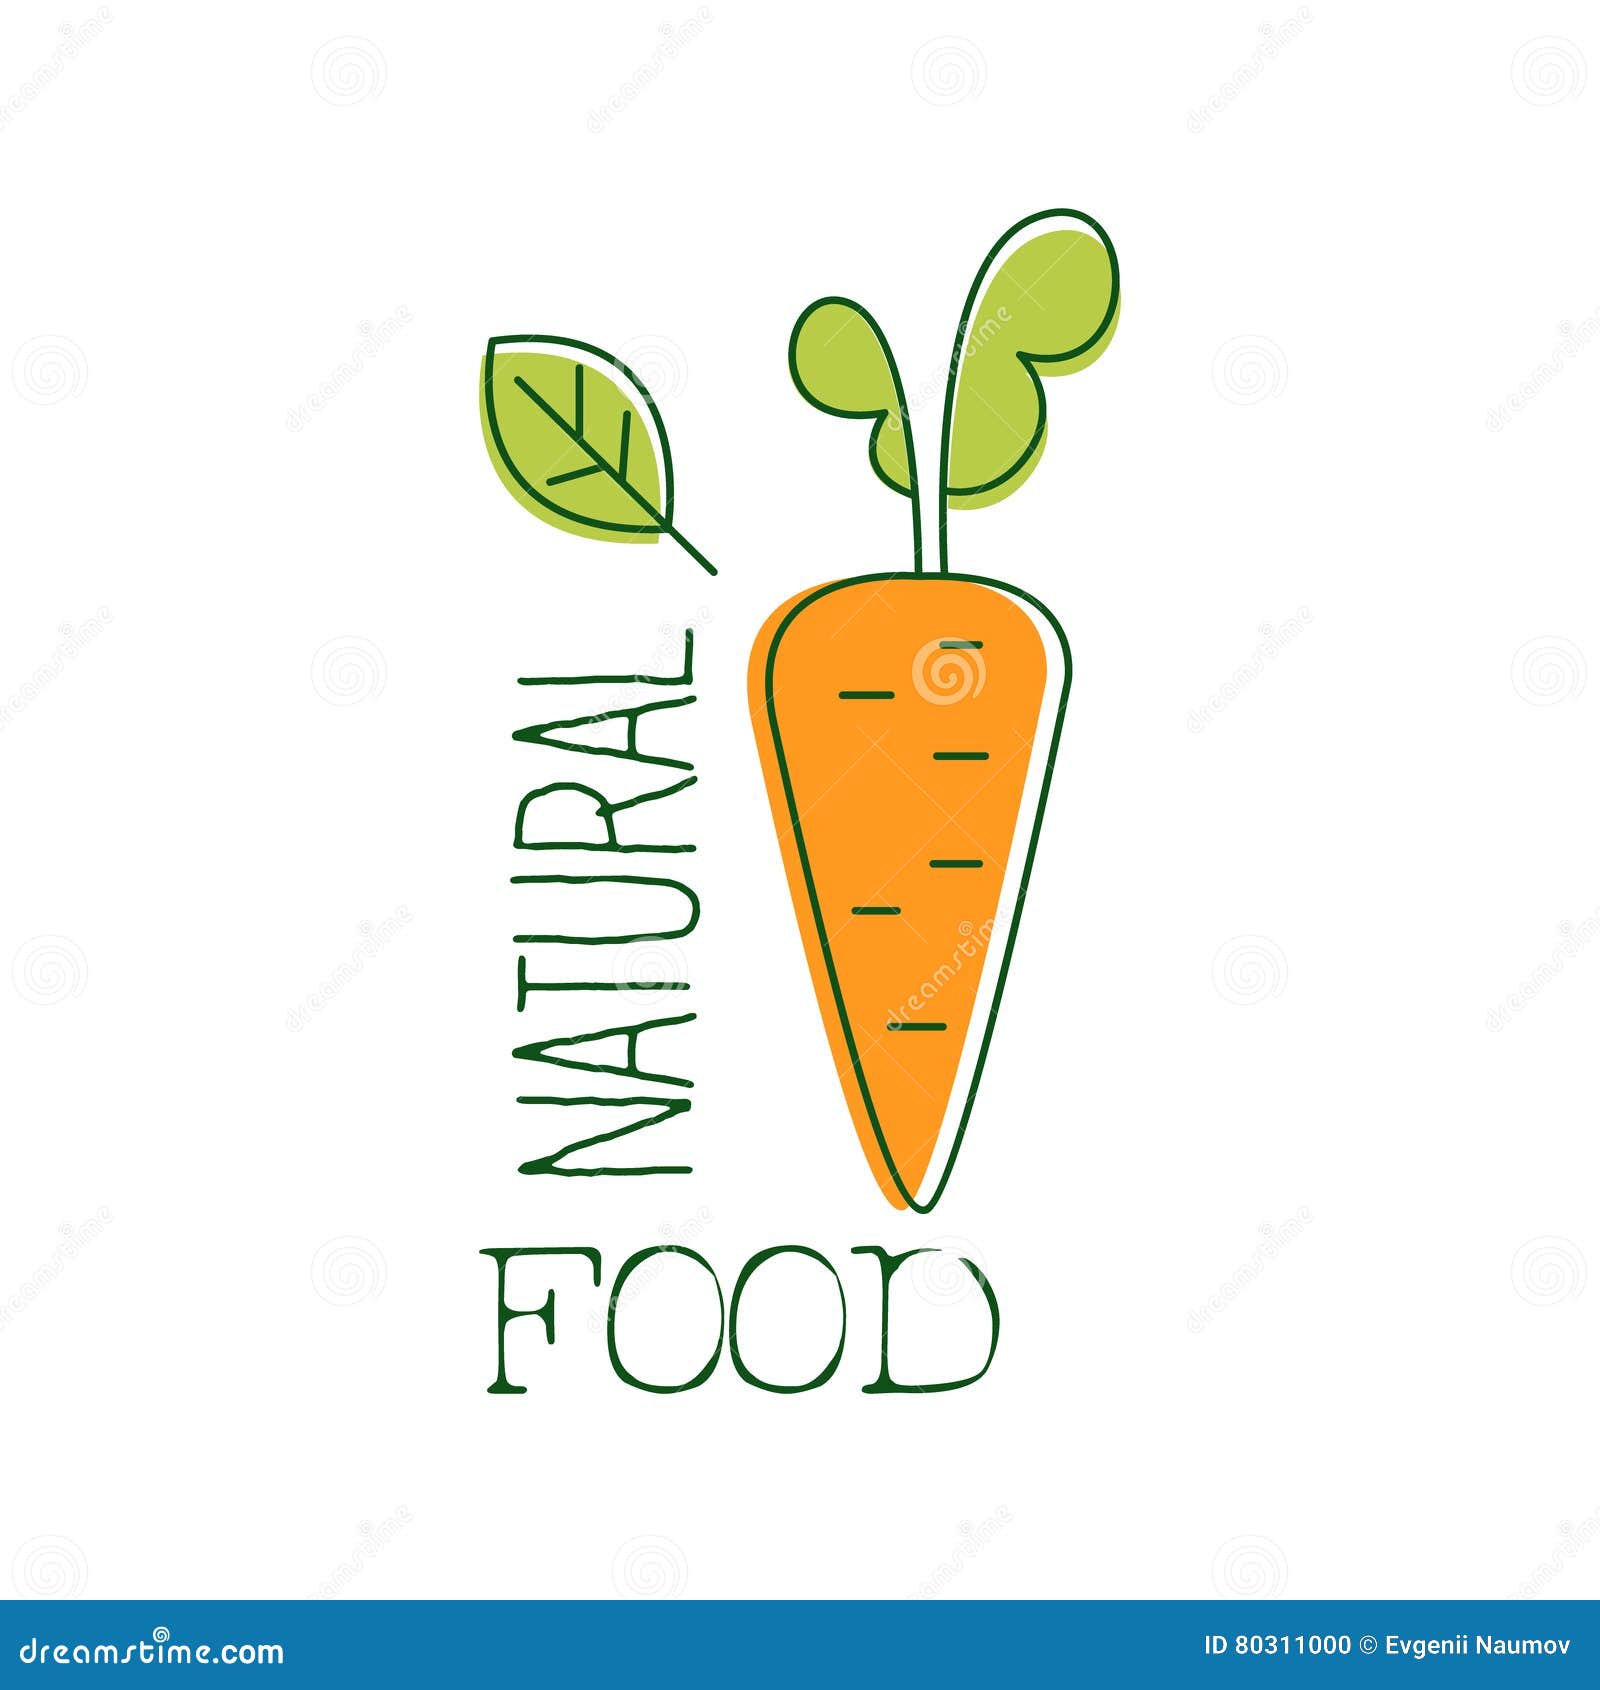 Fresh Vegan Food Promotional Sign with Raw Carrot for Vegetarian, Vegan and  Raw Food Diet Menu Stock Vector - Illustration of design, vegetable:  80311000